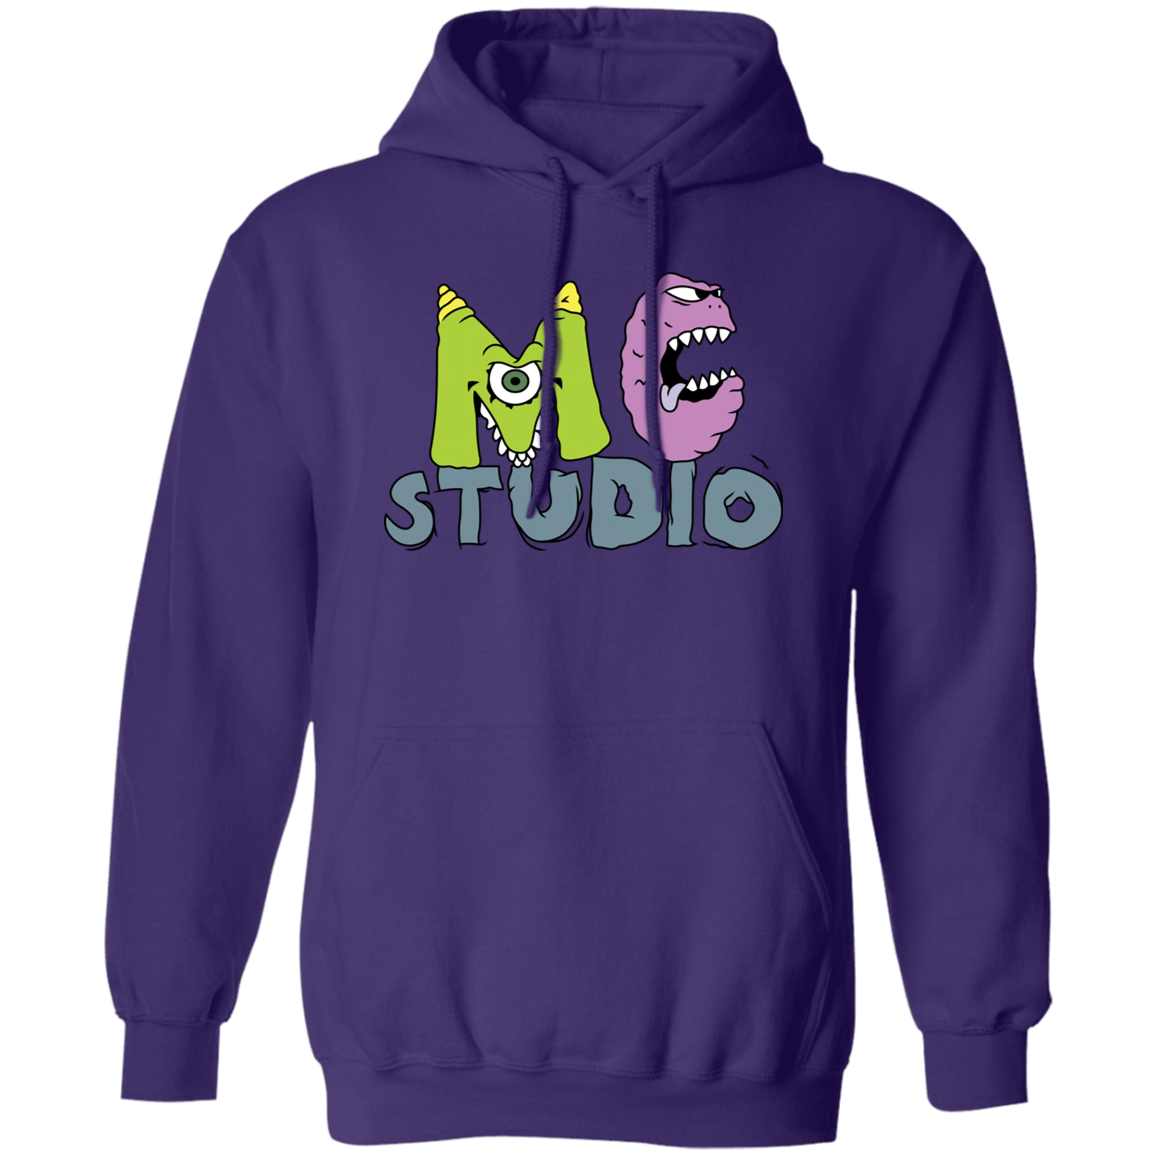 MC Studio Pullover Hoodie